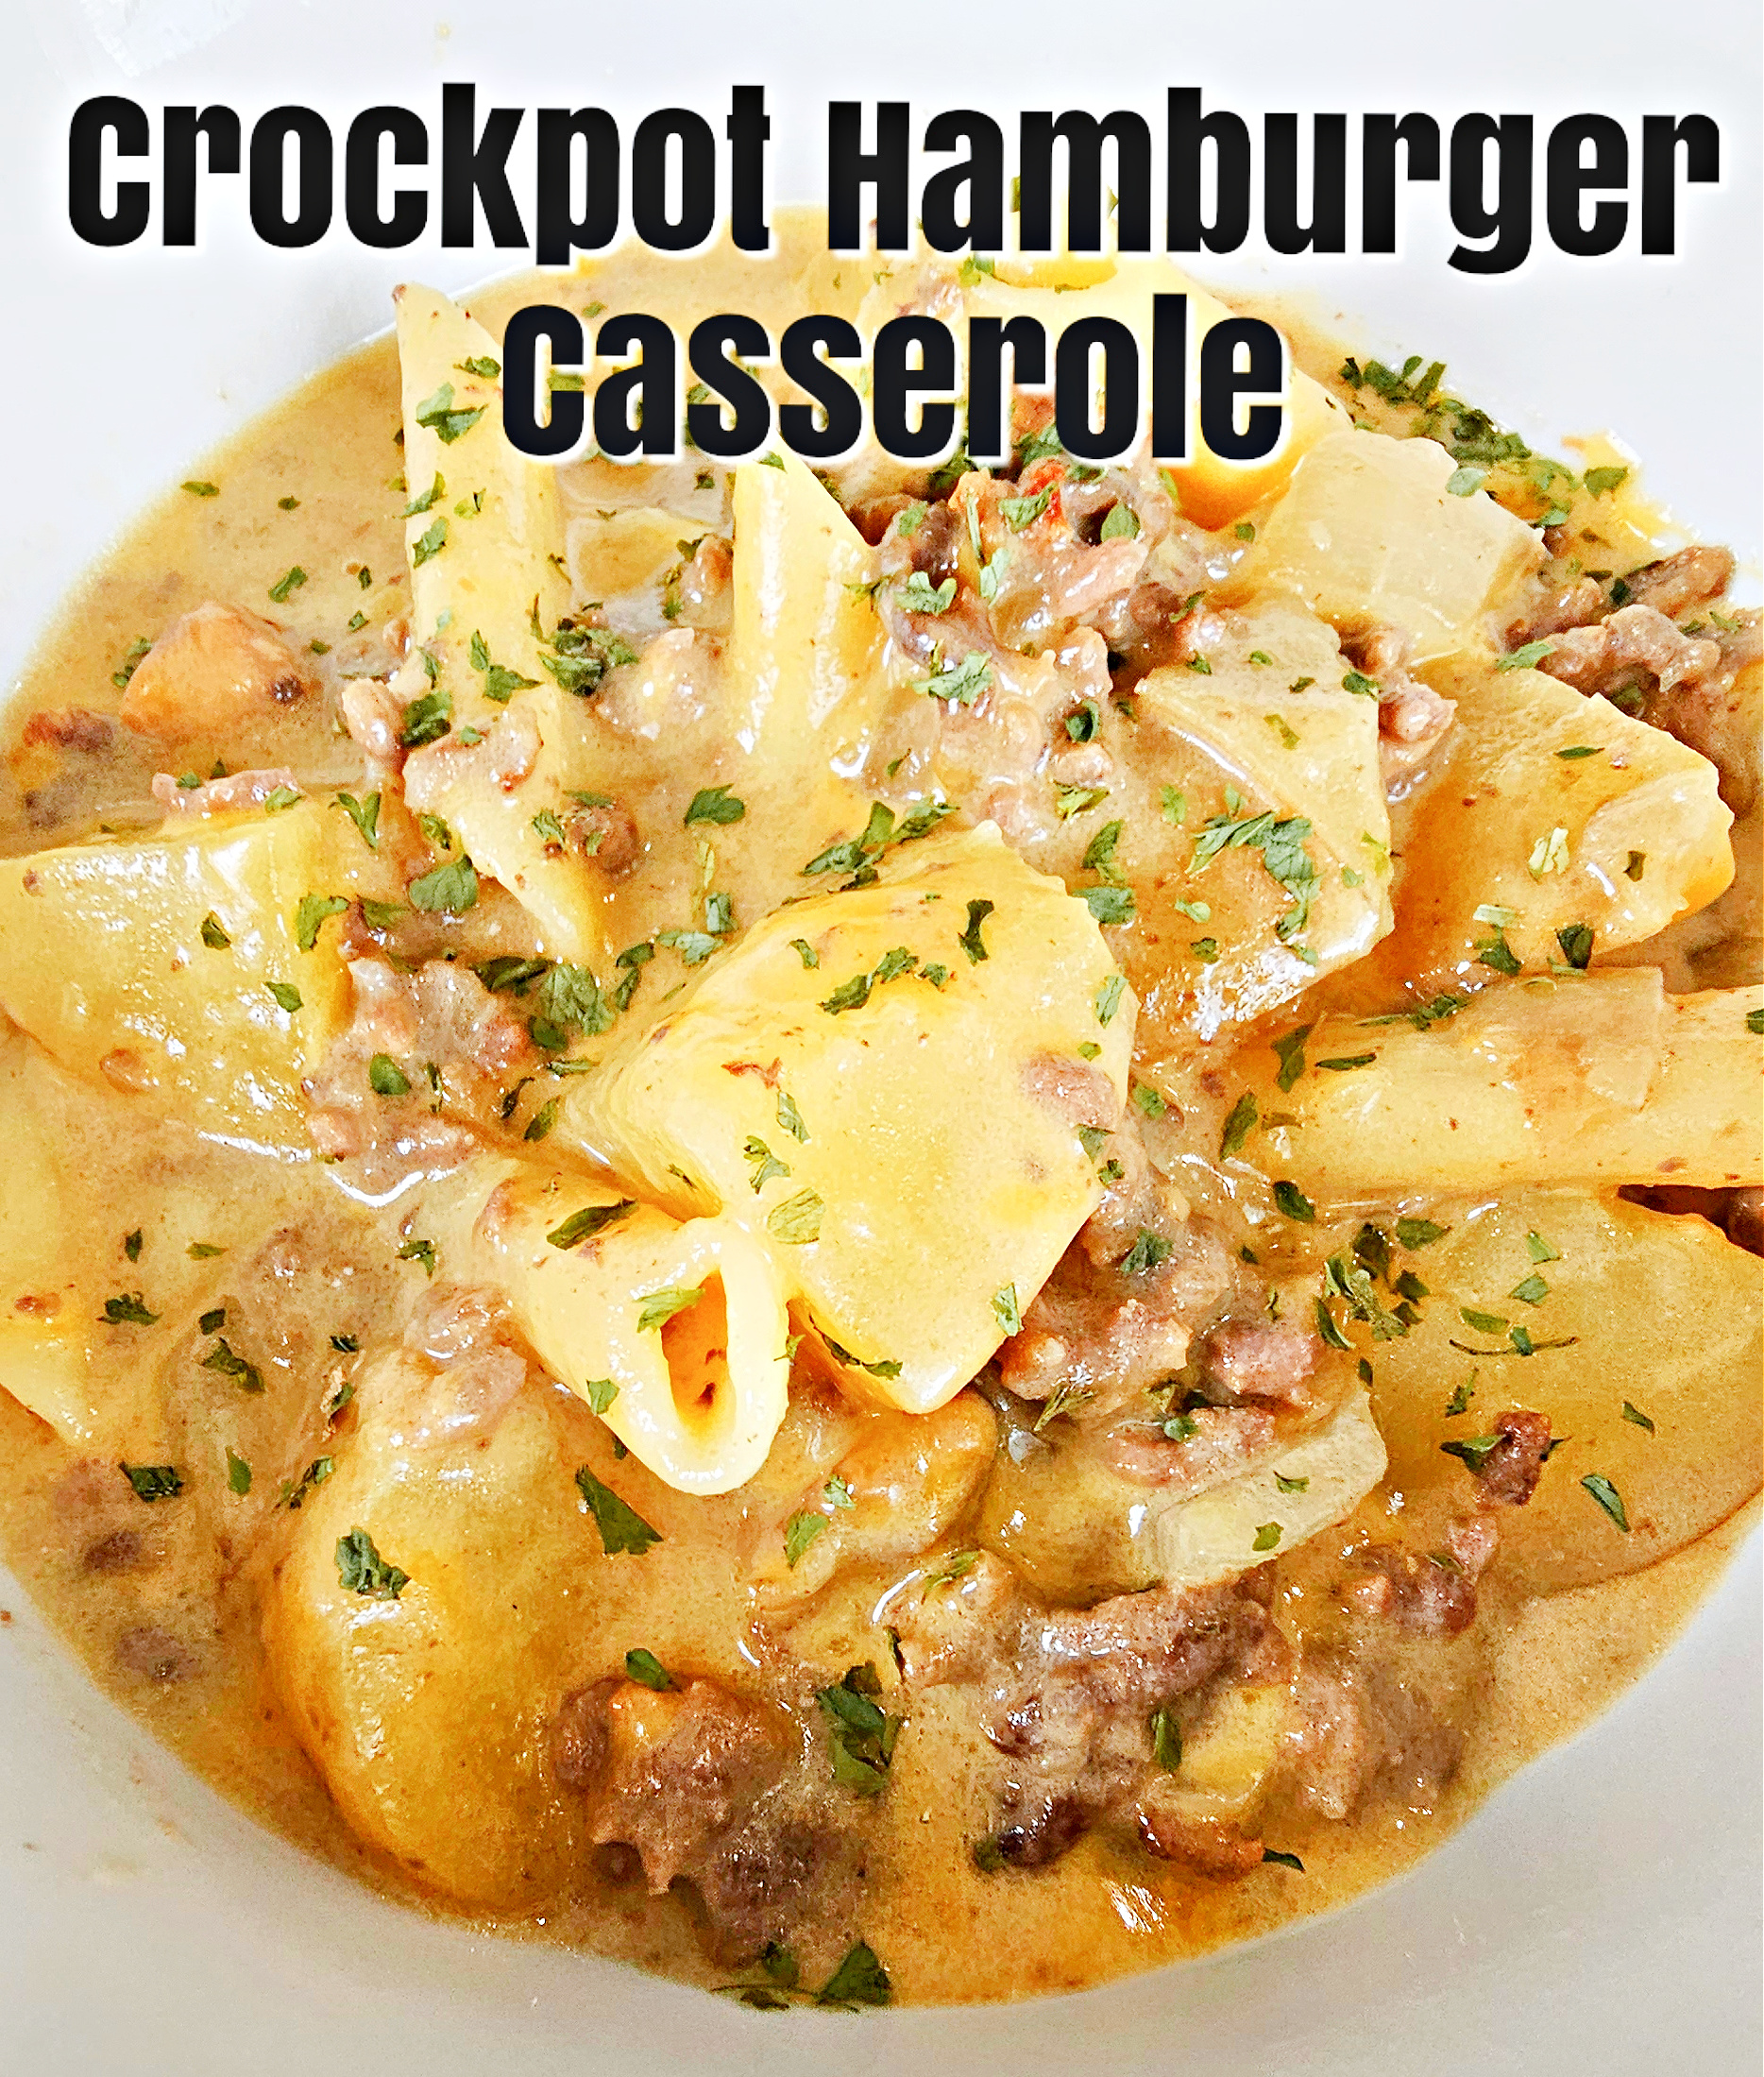 Crockpot Hamburger Casserole #crockpot #slowcooker #hamburger #beefrecipe #casserole #onepotmeal #dinnerrecipe #easyrecipe